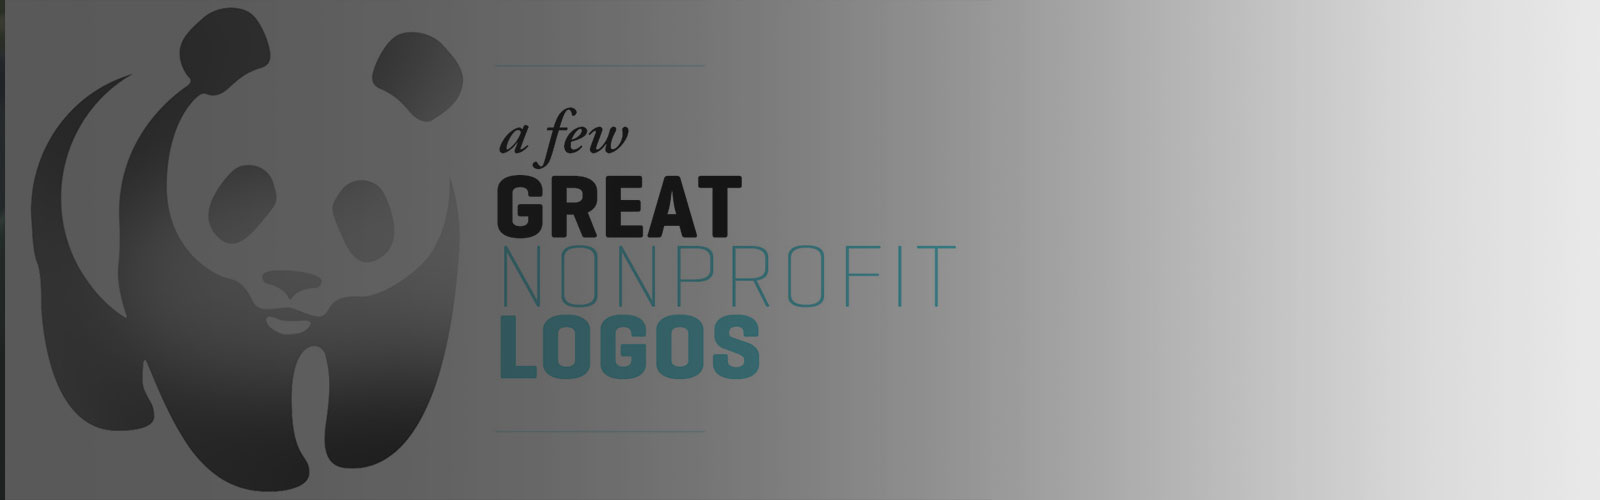 6 Great Nonprofit Logos - Nonprofit Websites & Fundraising Solutions